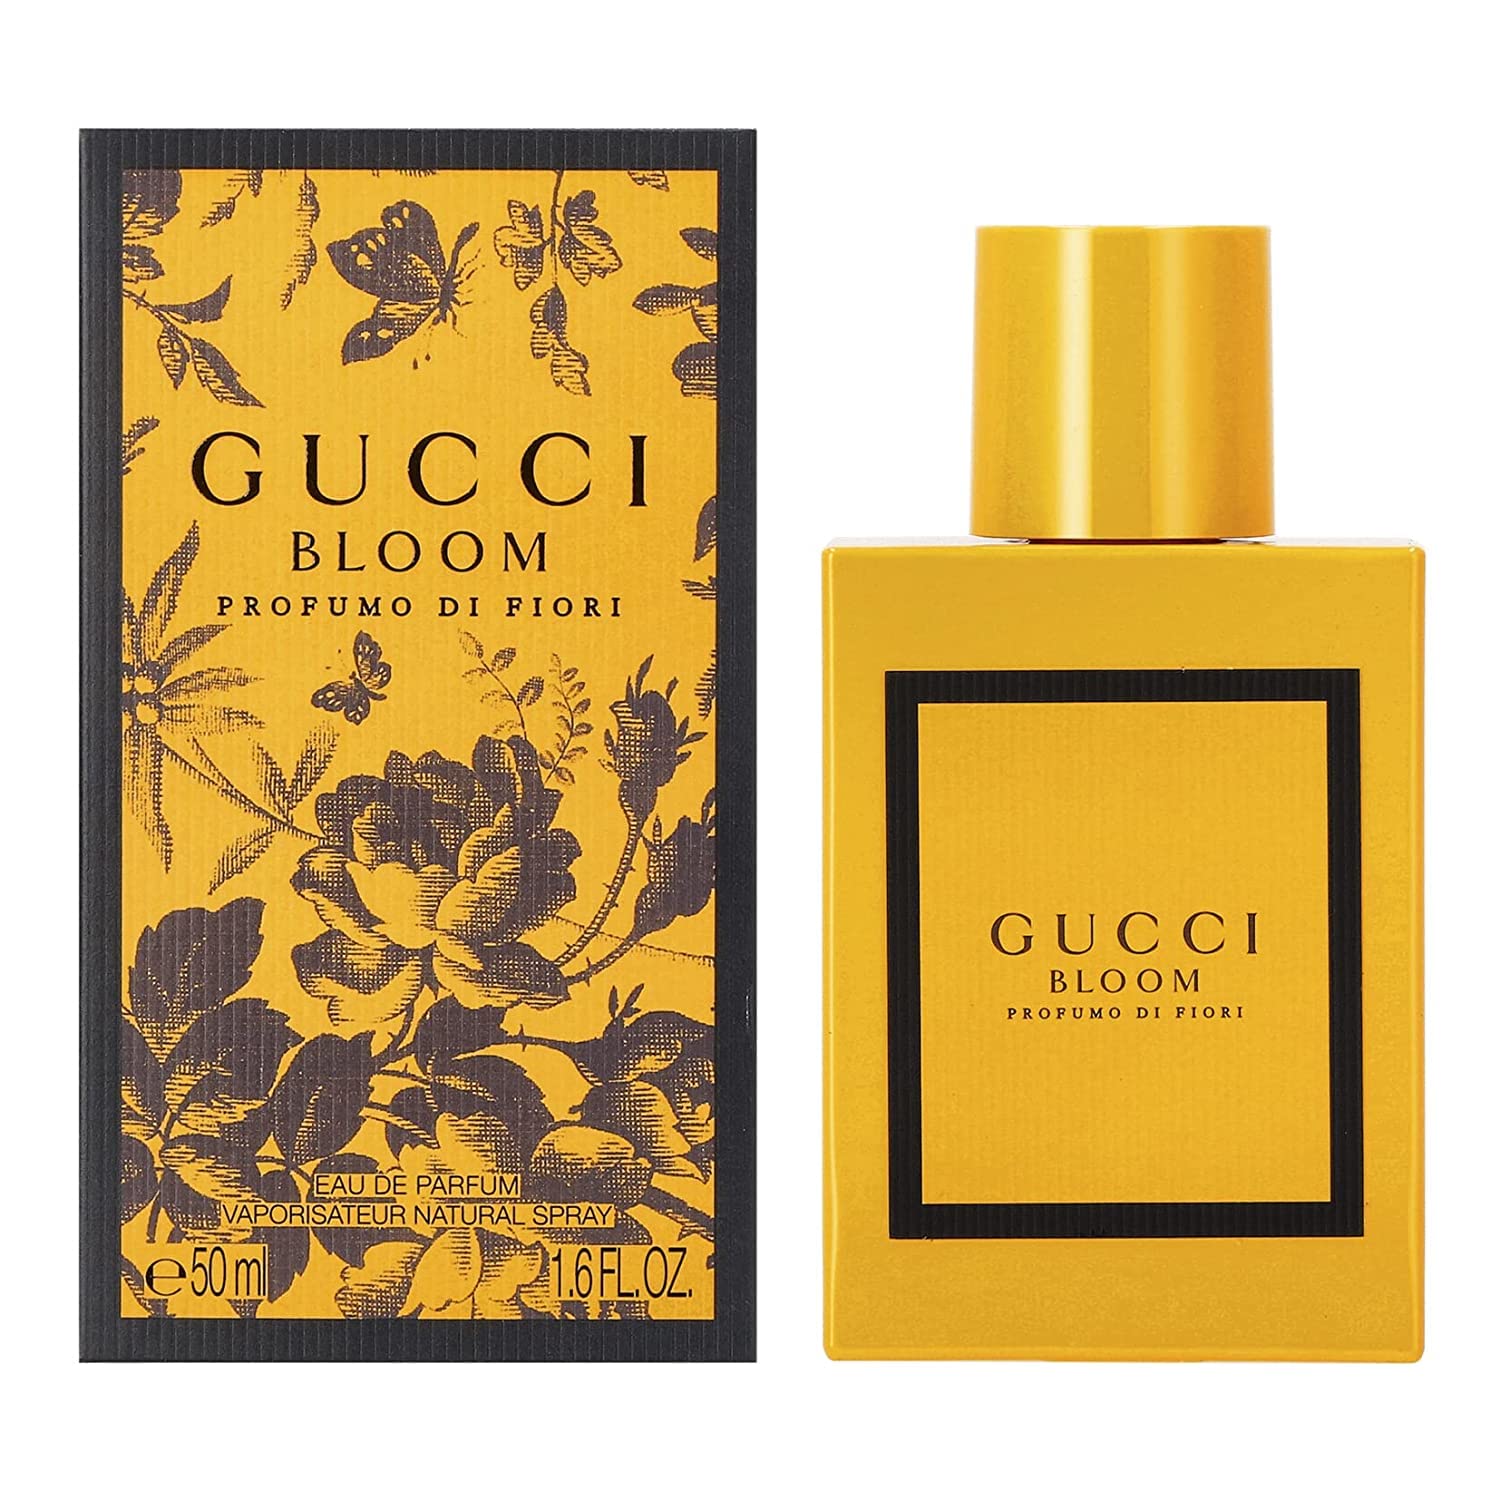 Gucci Bloom Profumo Di Fiori Eau De Parfume Spray for Women, Oriental Floral, 1.6 Fl Oz